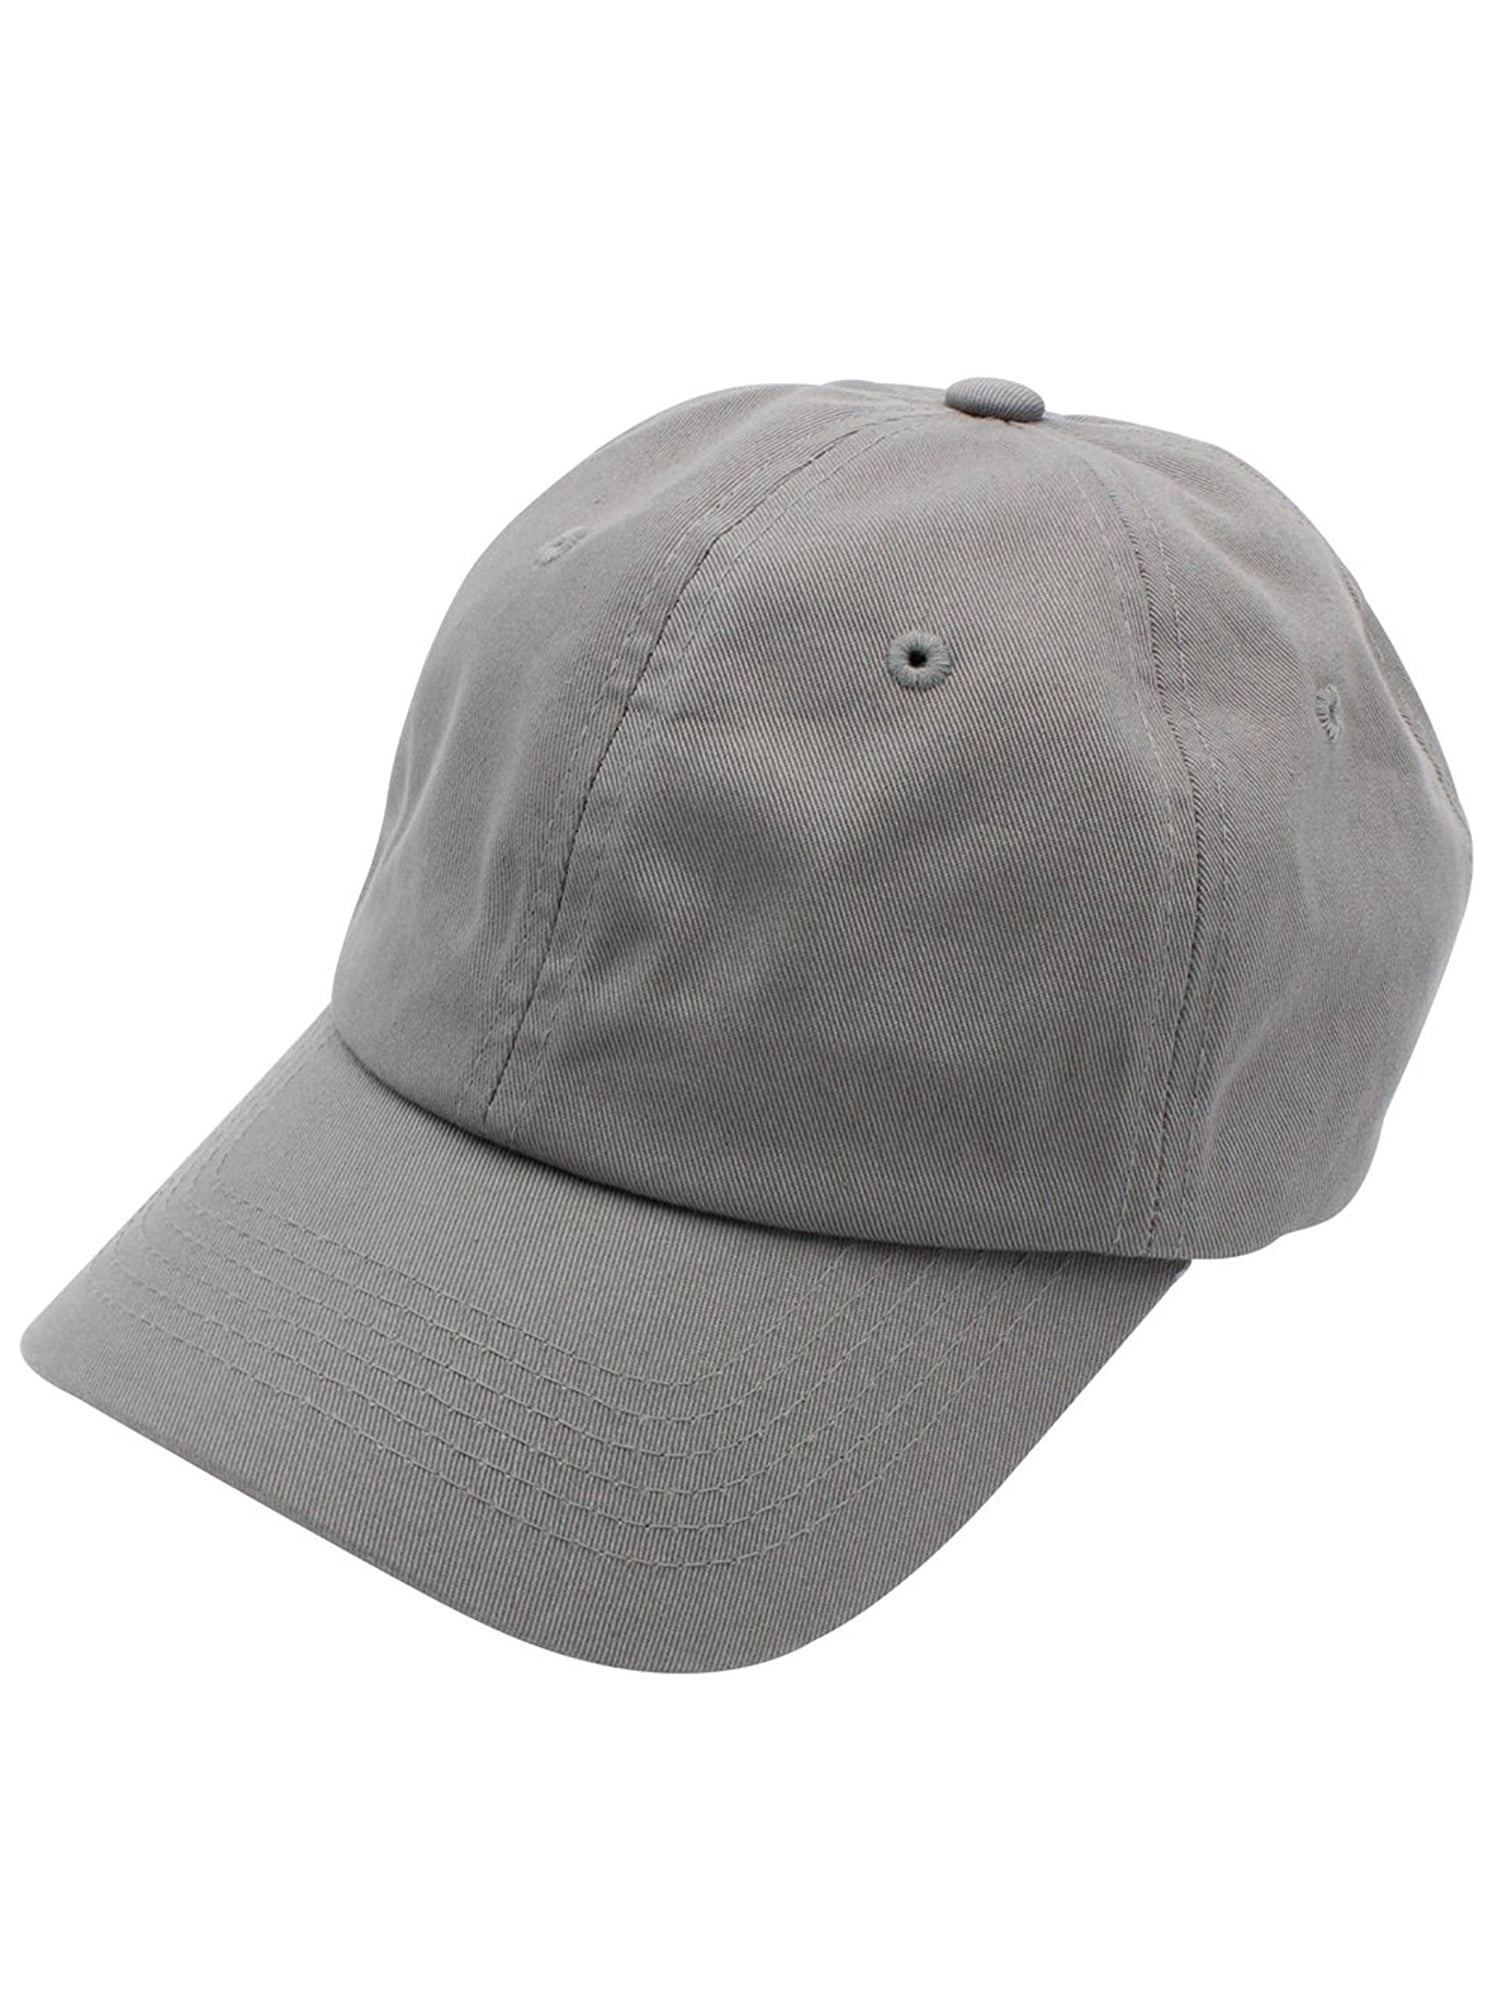 Essential Basic Plain Dad Hat 100% Cotton Unstructured Hat Unisex ...